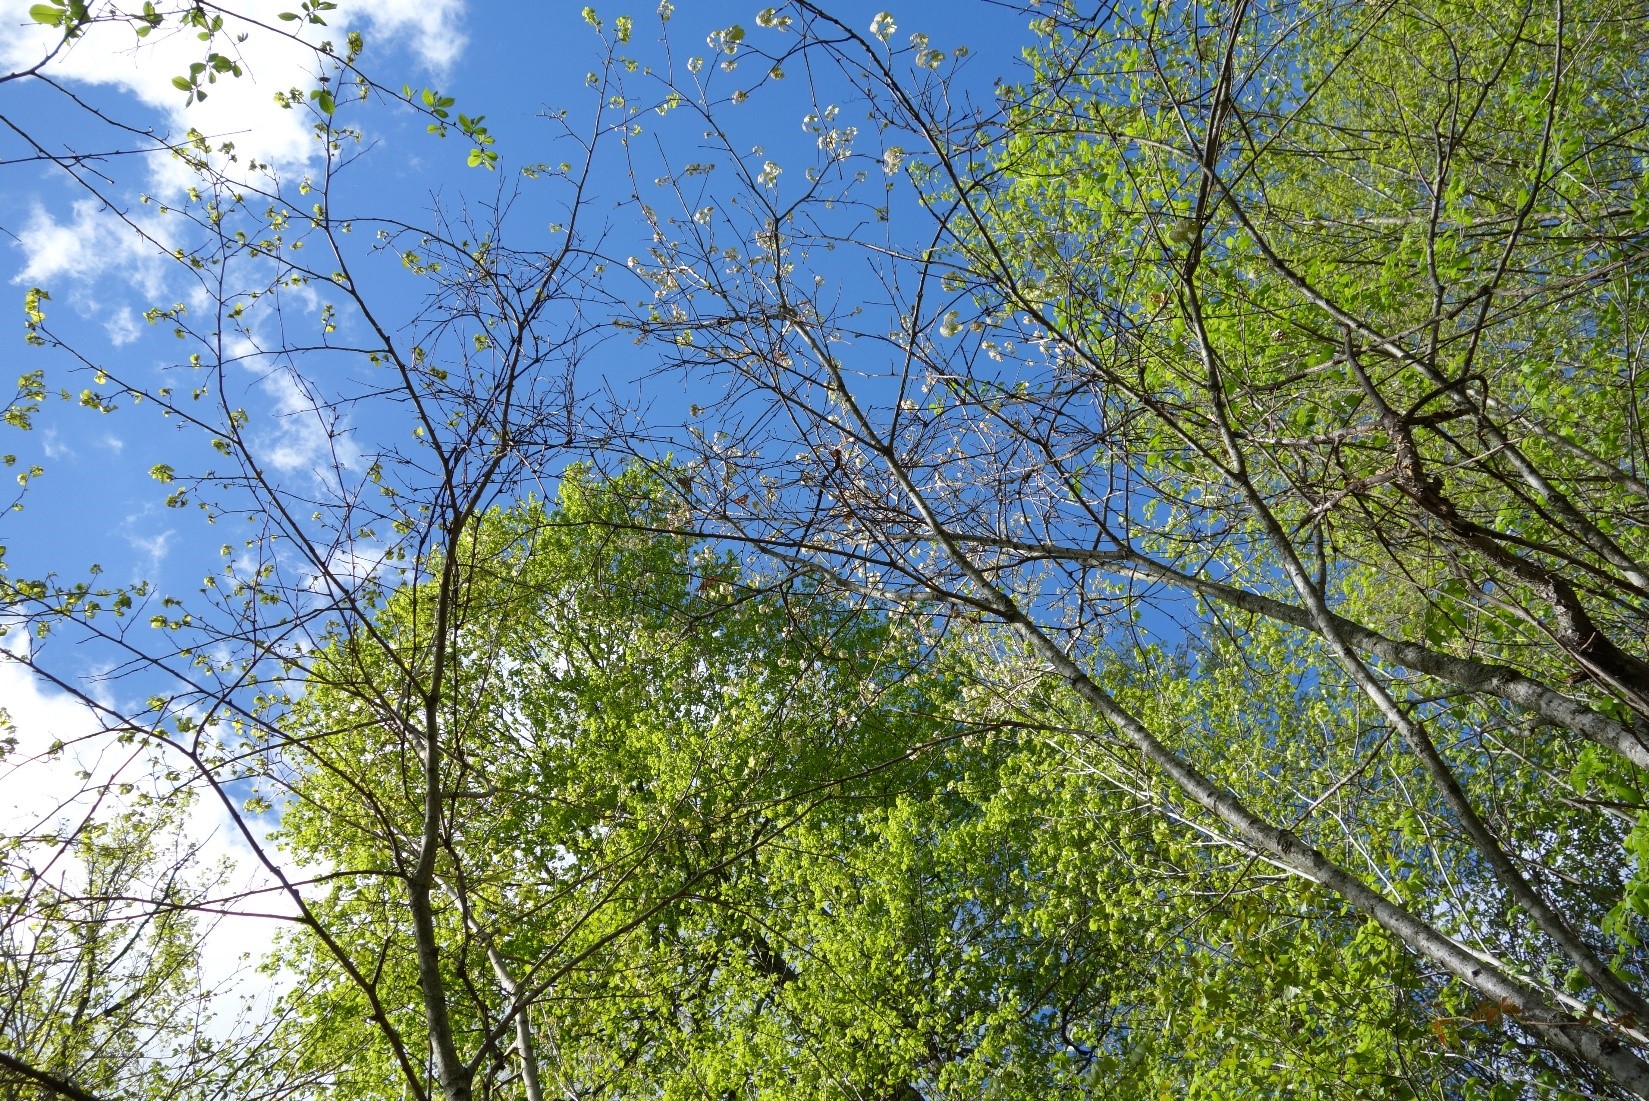 Oak regeneration with leaves flushing in spring 2021 